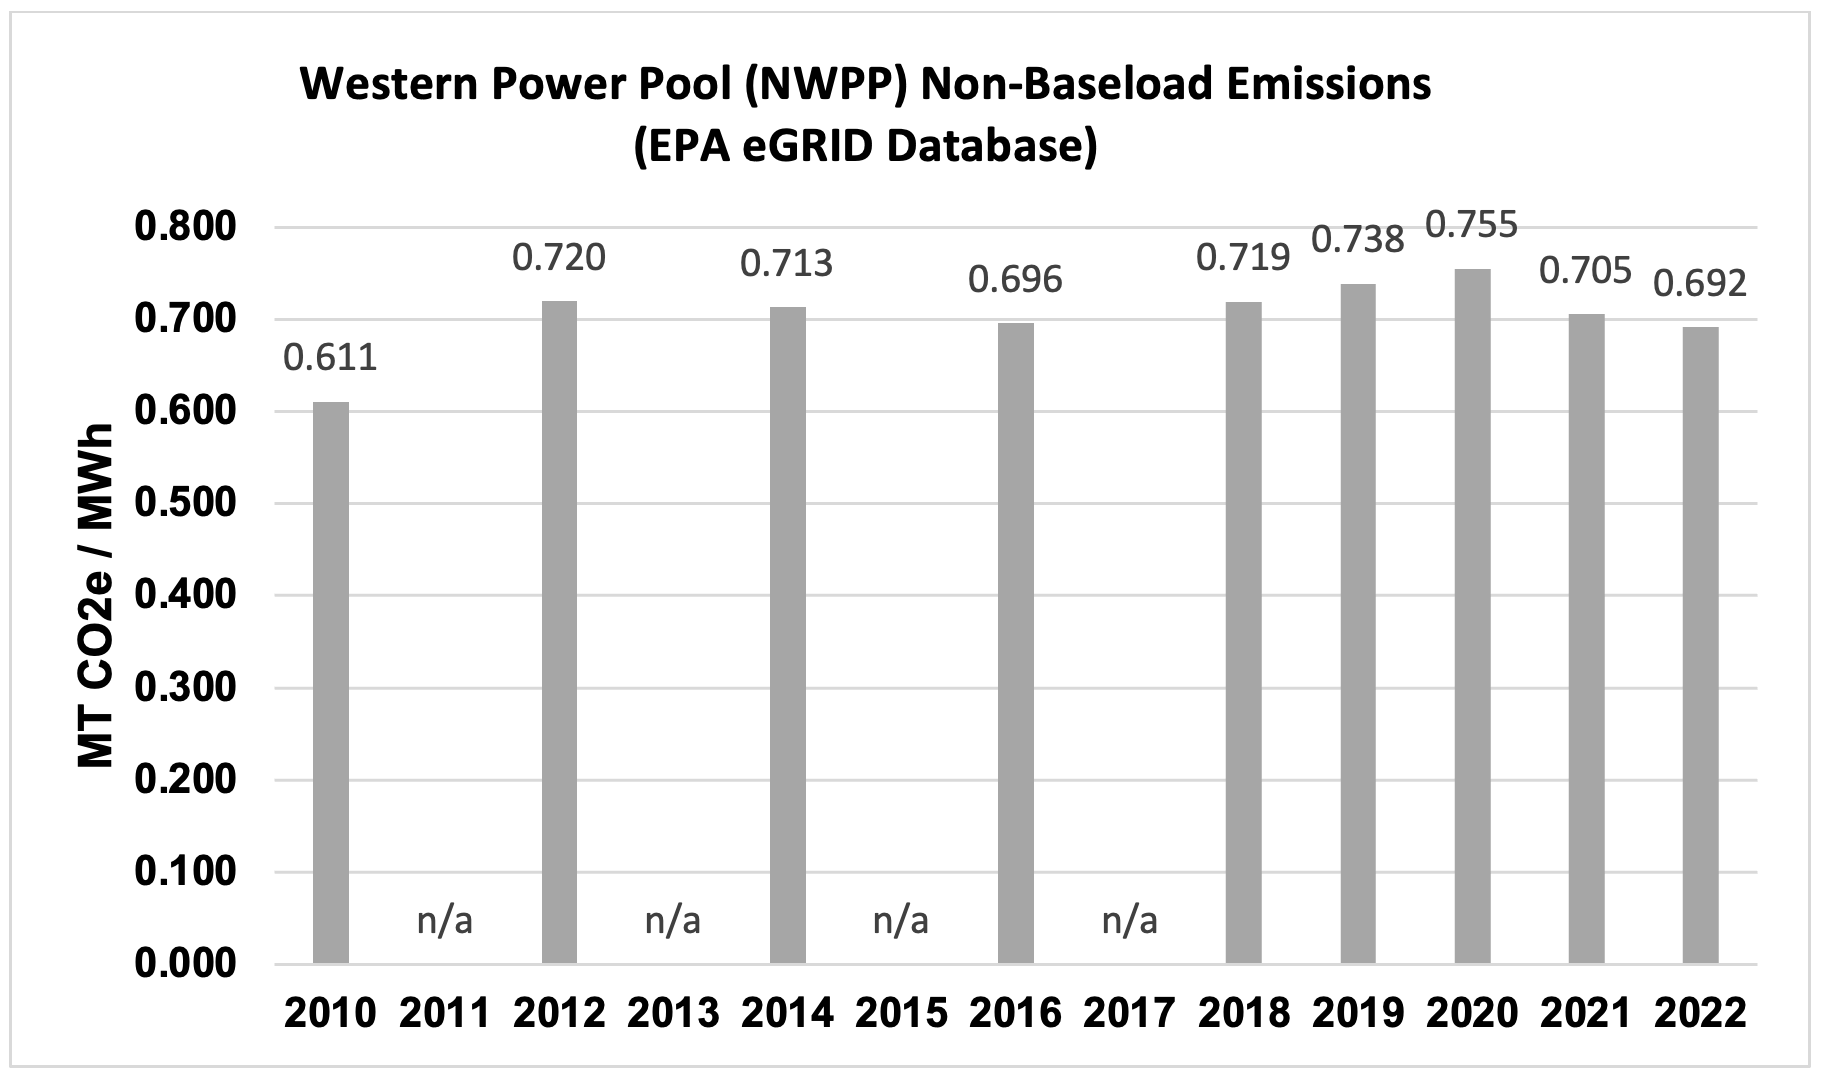 US EPA eGRID Non-Baseload Emissions Rate for NWPP, 2010-2022